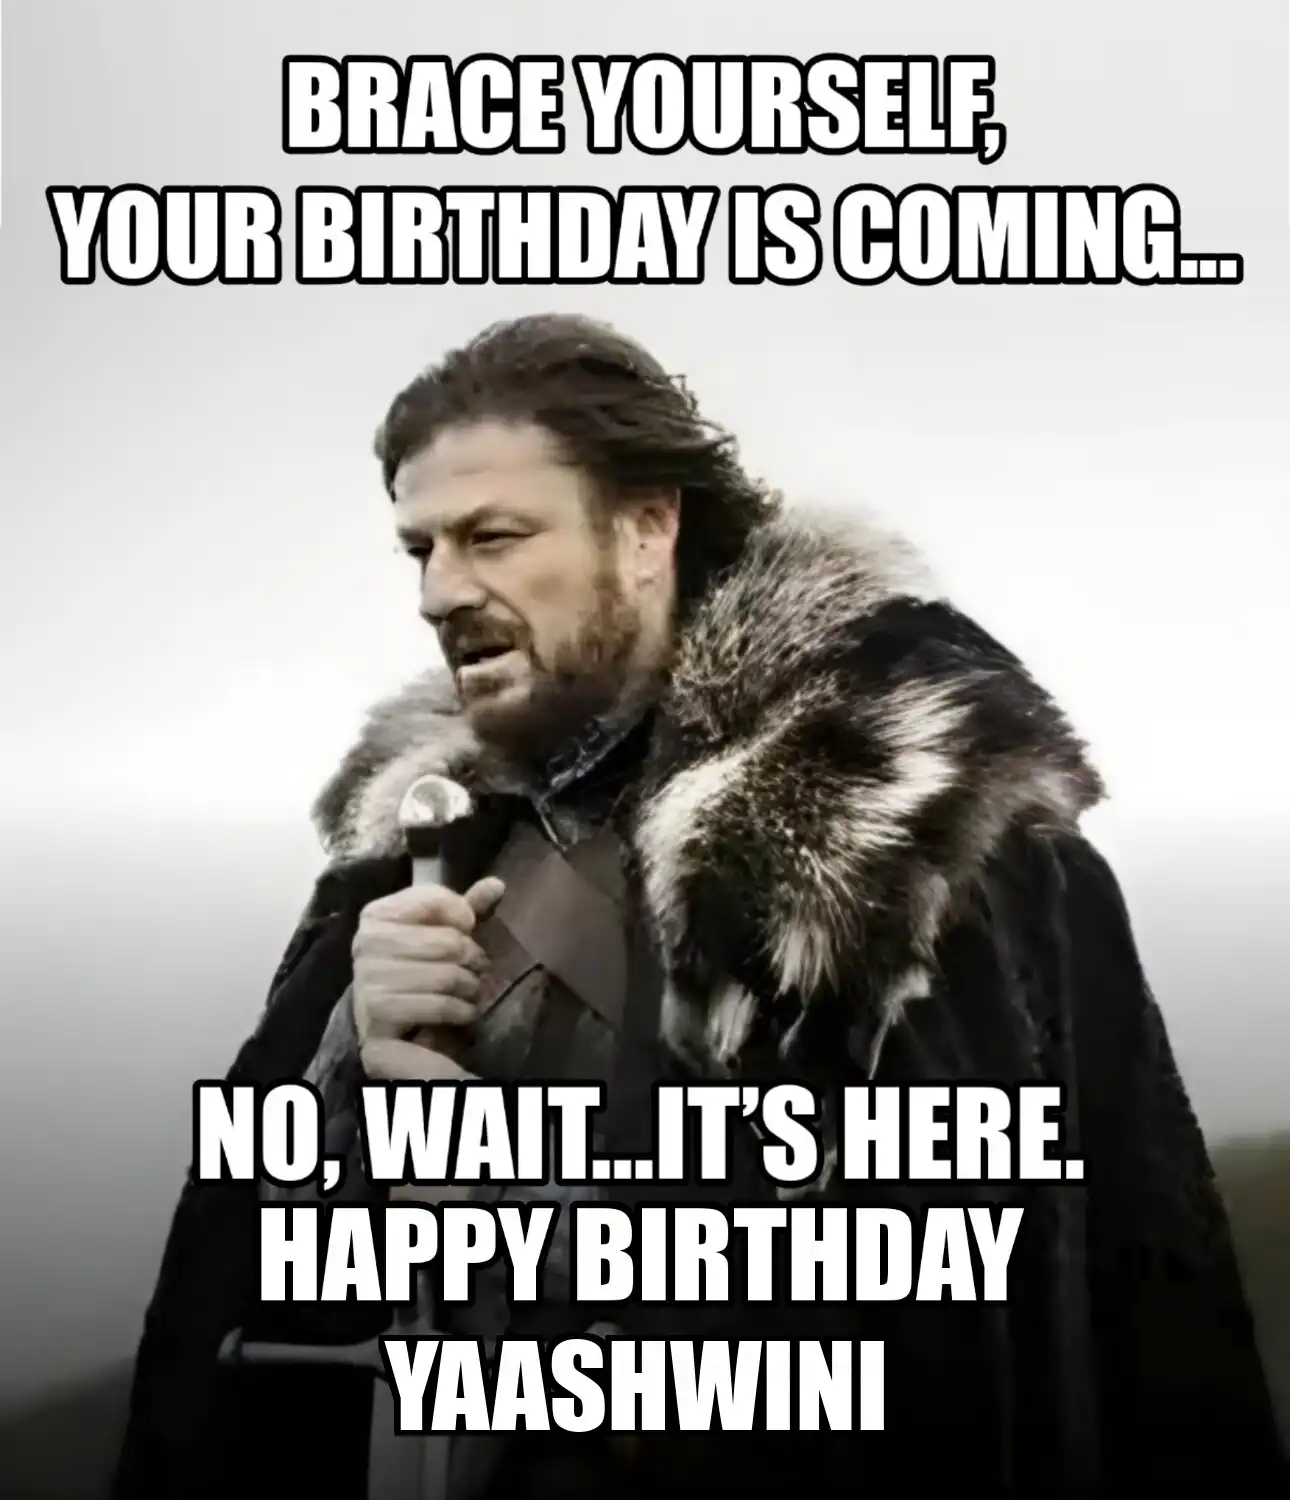 Happy Birthday Yaashwini Brace Yourself Your Birthday Is Coming Meme